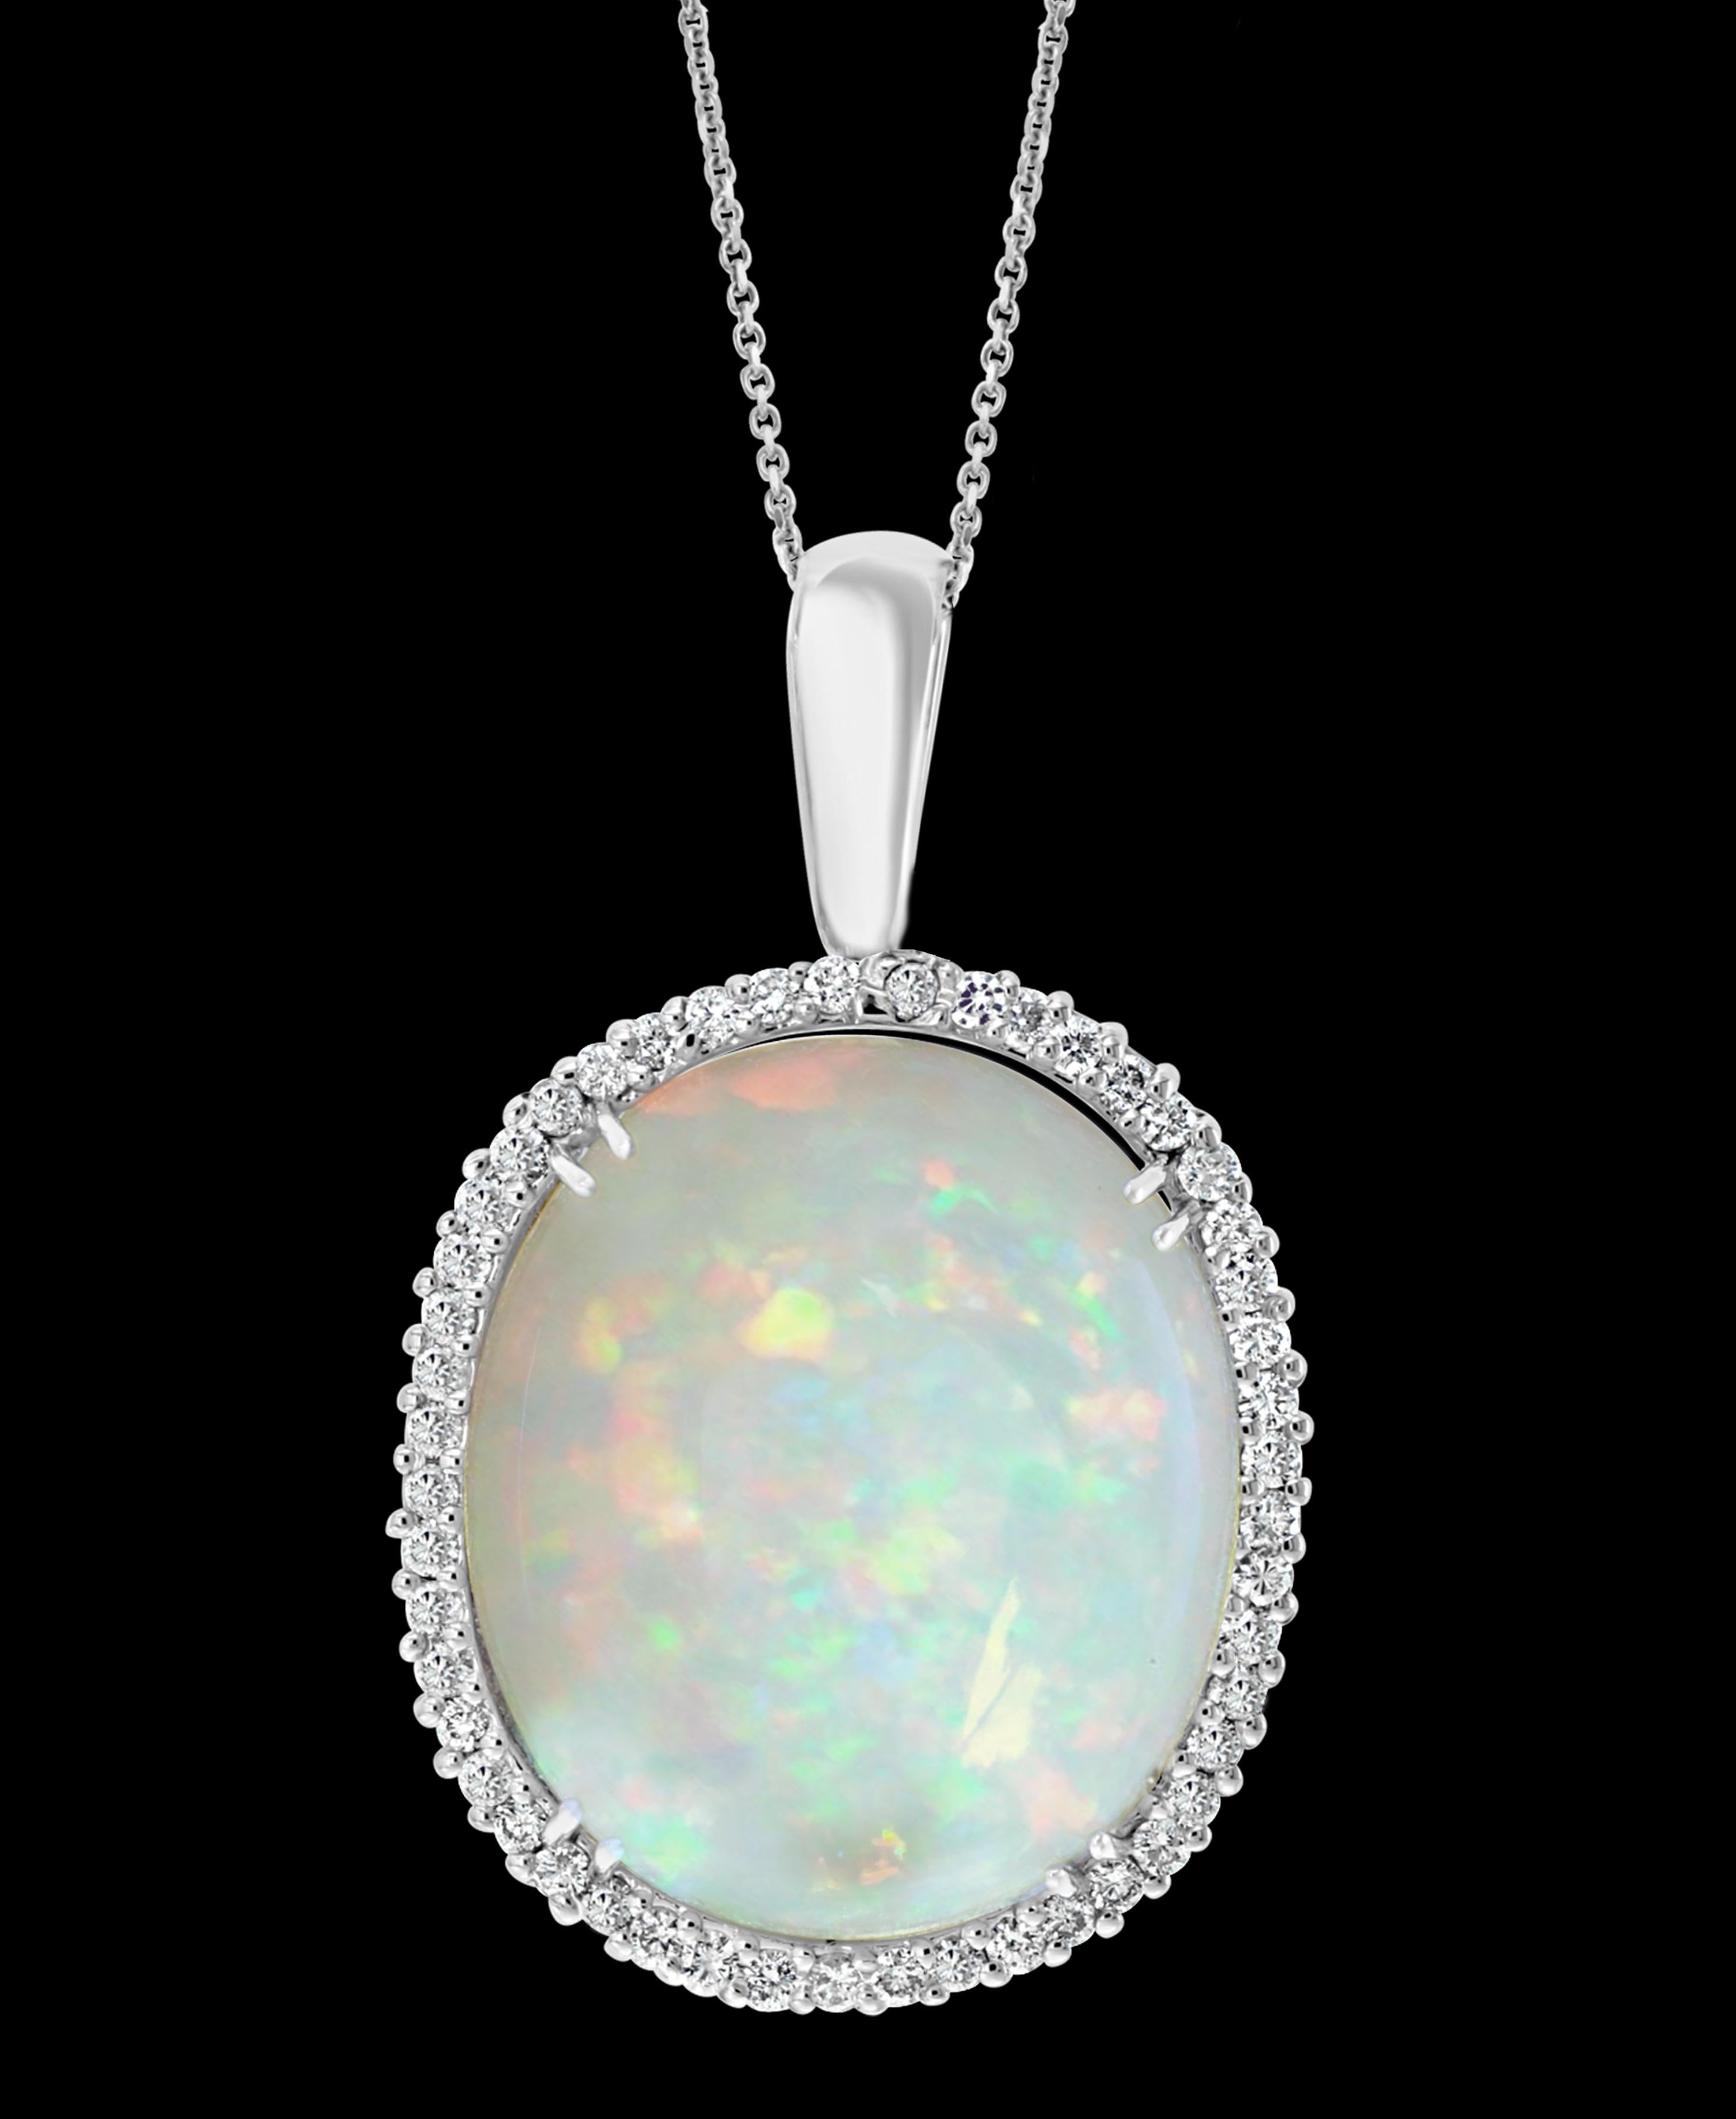 Oval Cut 54 Carat Oval Ethiopian Opal and Diamond Pendant / Necklace 14 Karat White Gold